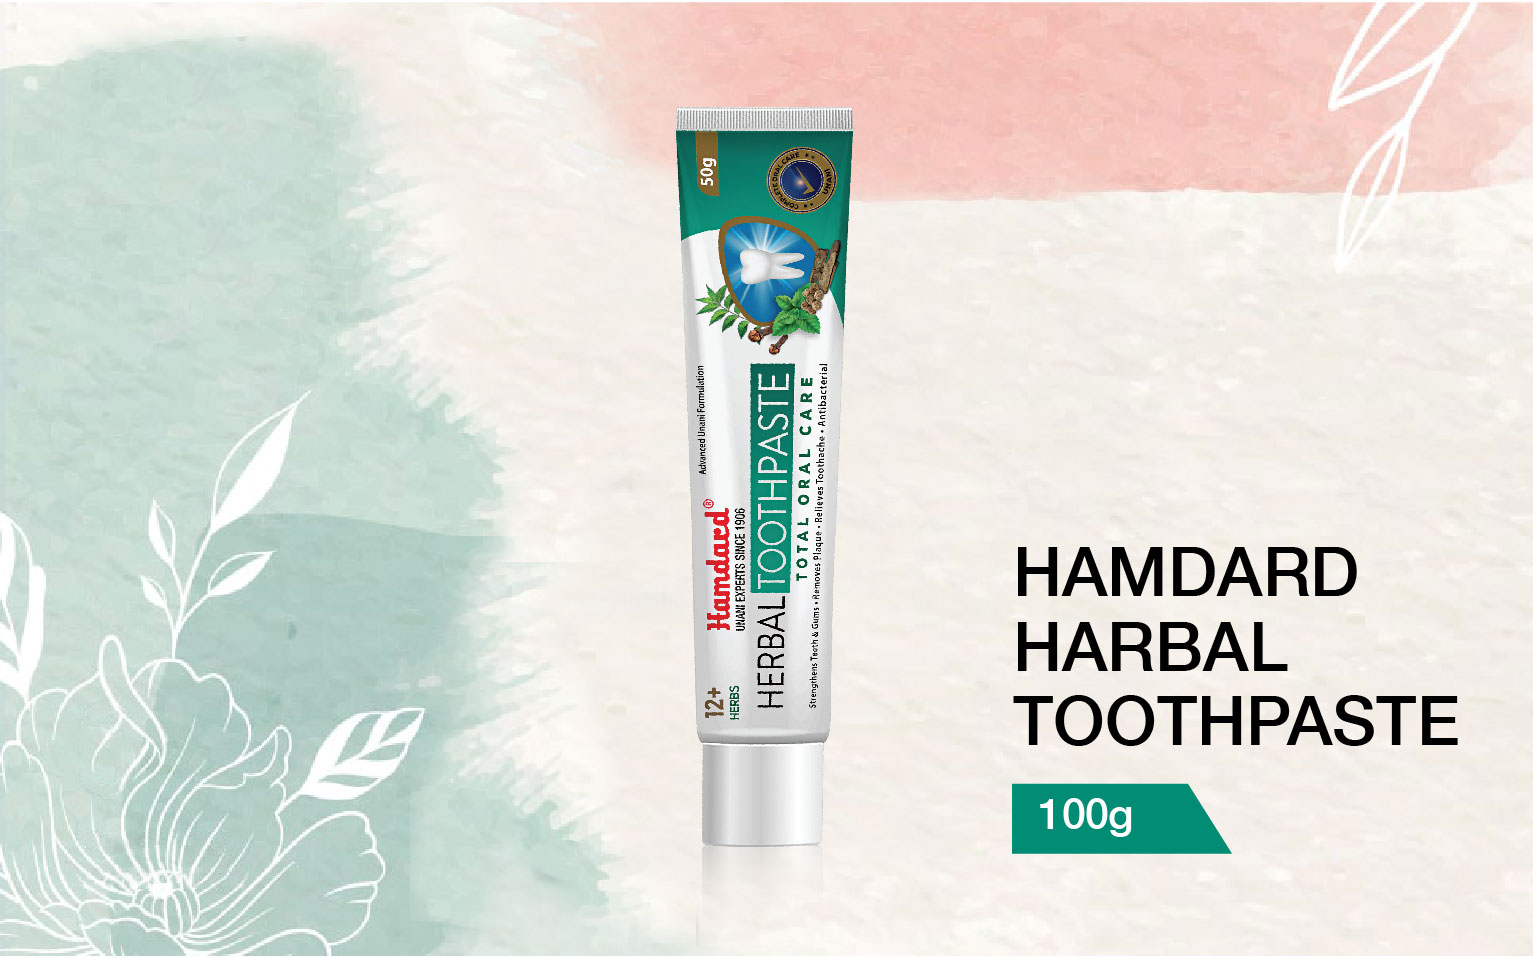 Hamdard harbal toothpaste total oral care